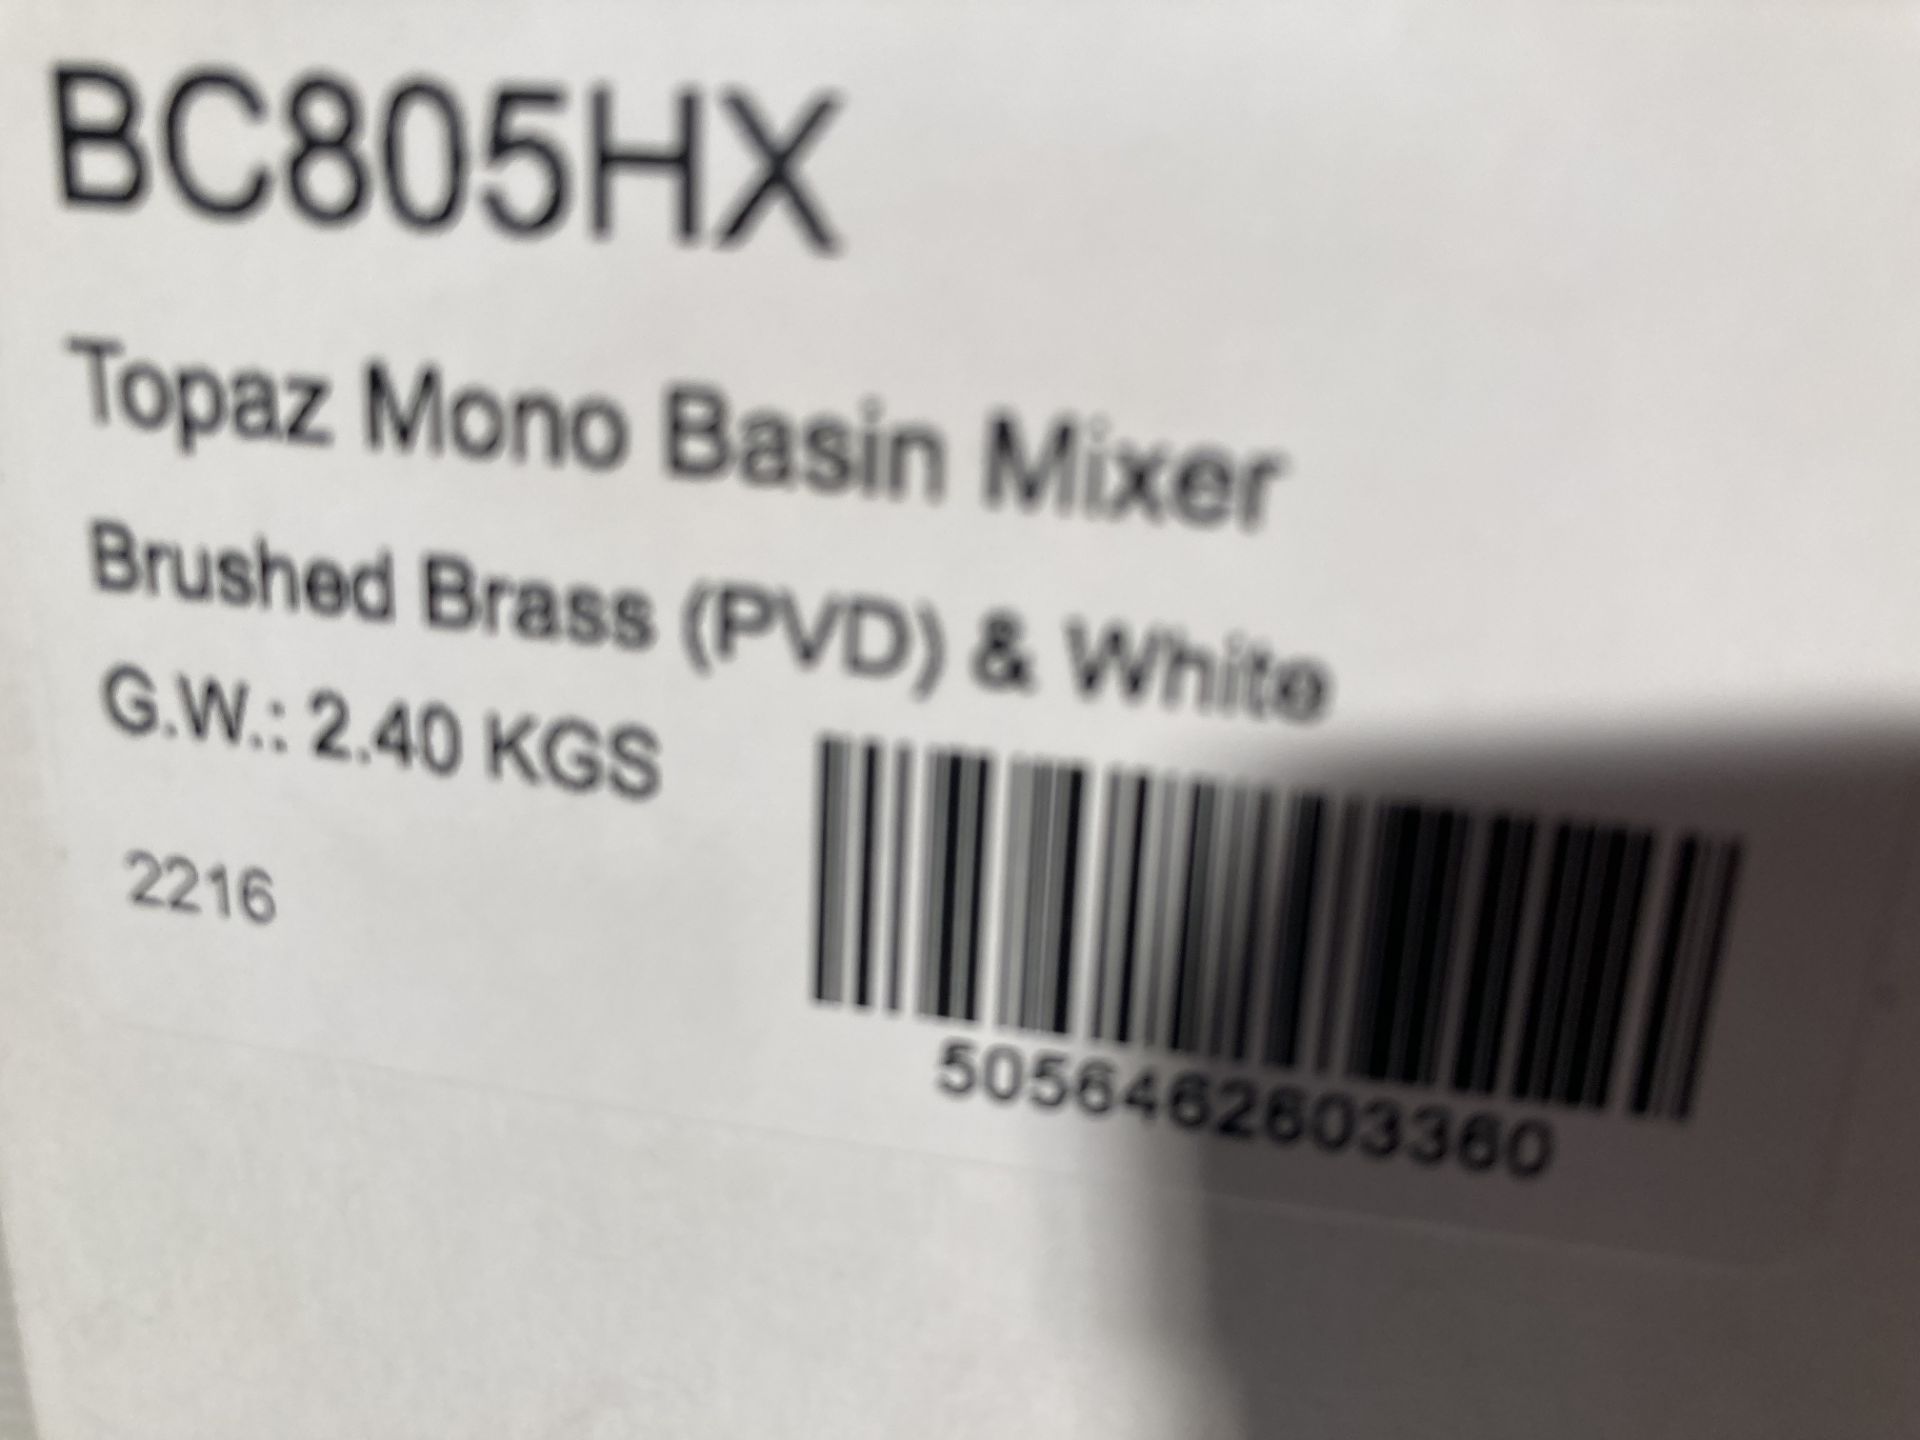 Topaz mono basin mixer tap in brushed brass (saleroom location: QL06) - Image 2 of 2